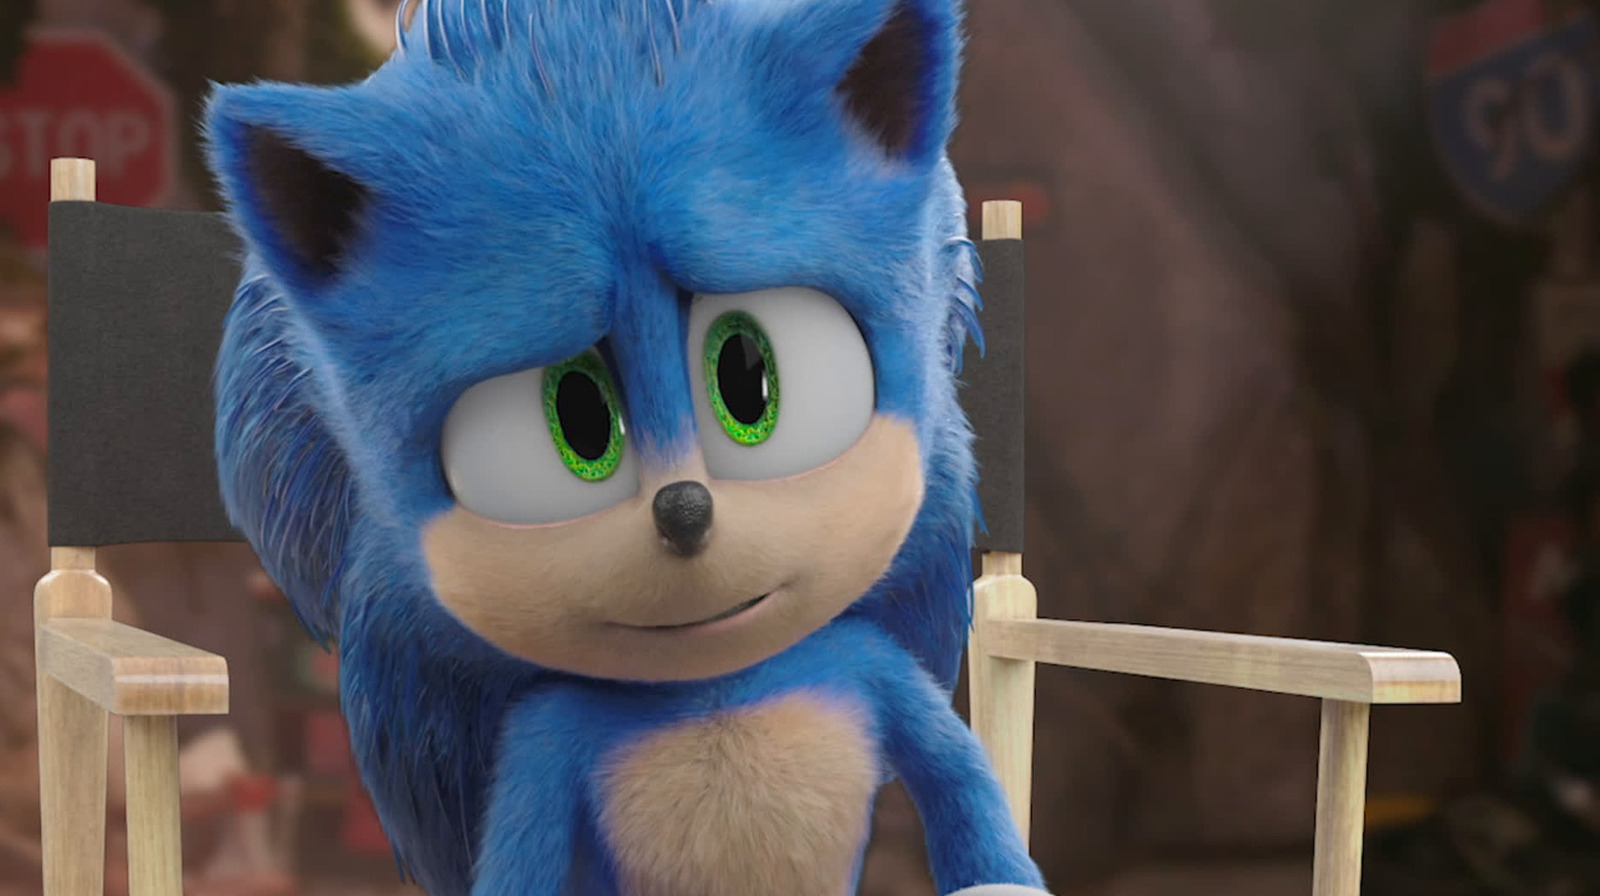 Sonic The Hedgehog 2 Trailer: Gotta Go Fast To The Sequel